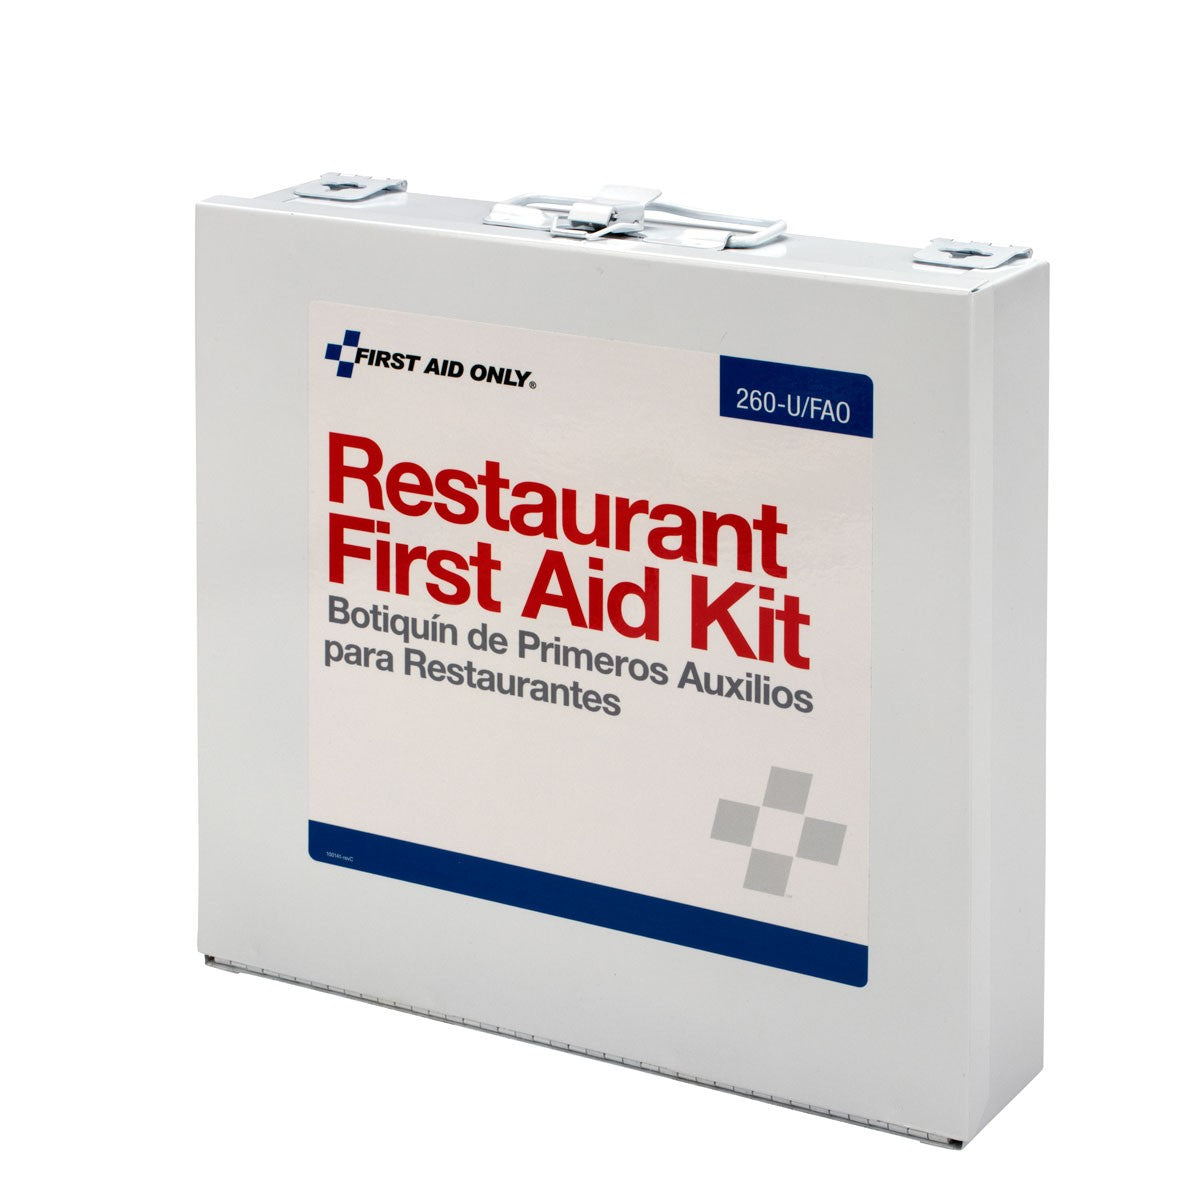 75 Person Restaurant First Aid Kit, Metal Case - W-260-U/FAO